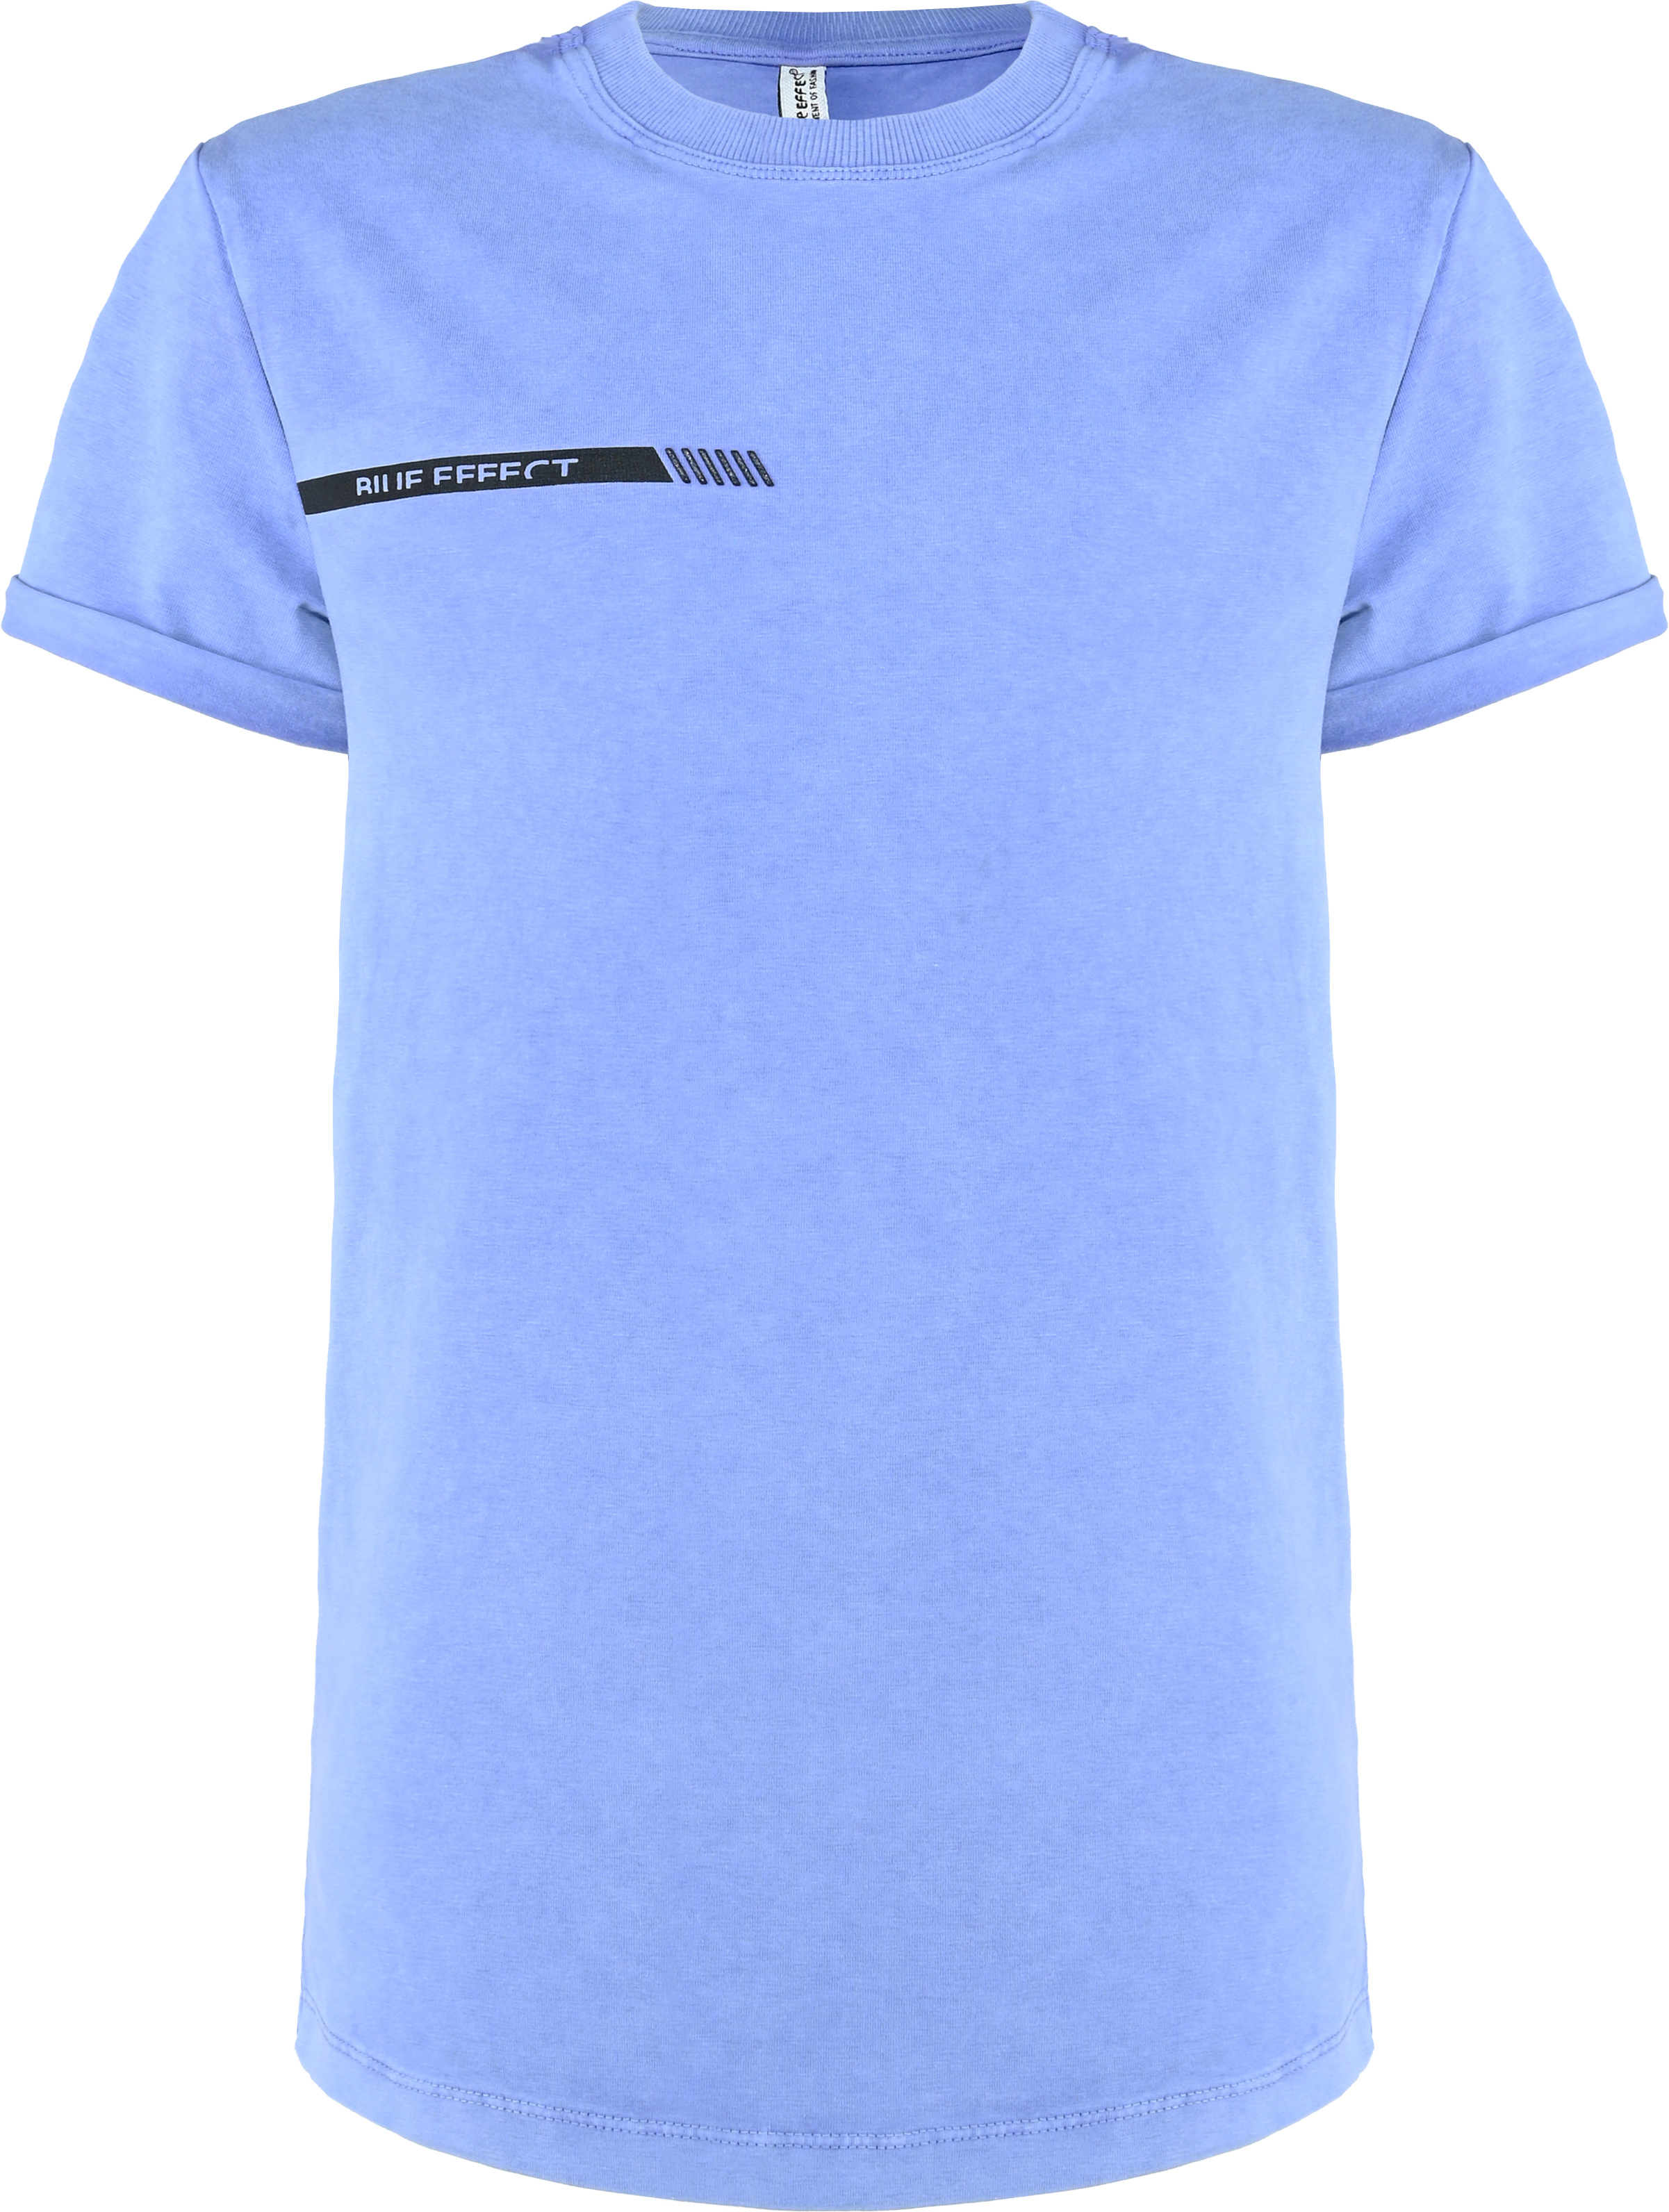 6191-Boys Long T-Shirt -Blue Effect 